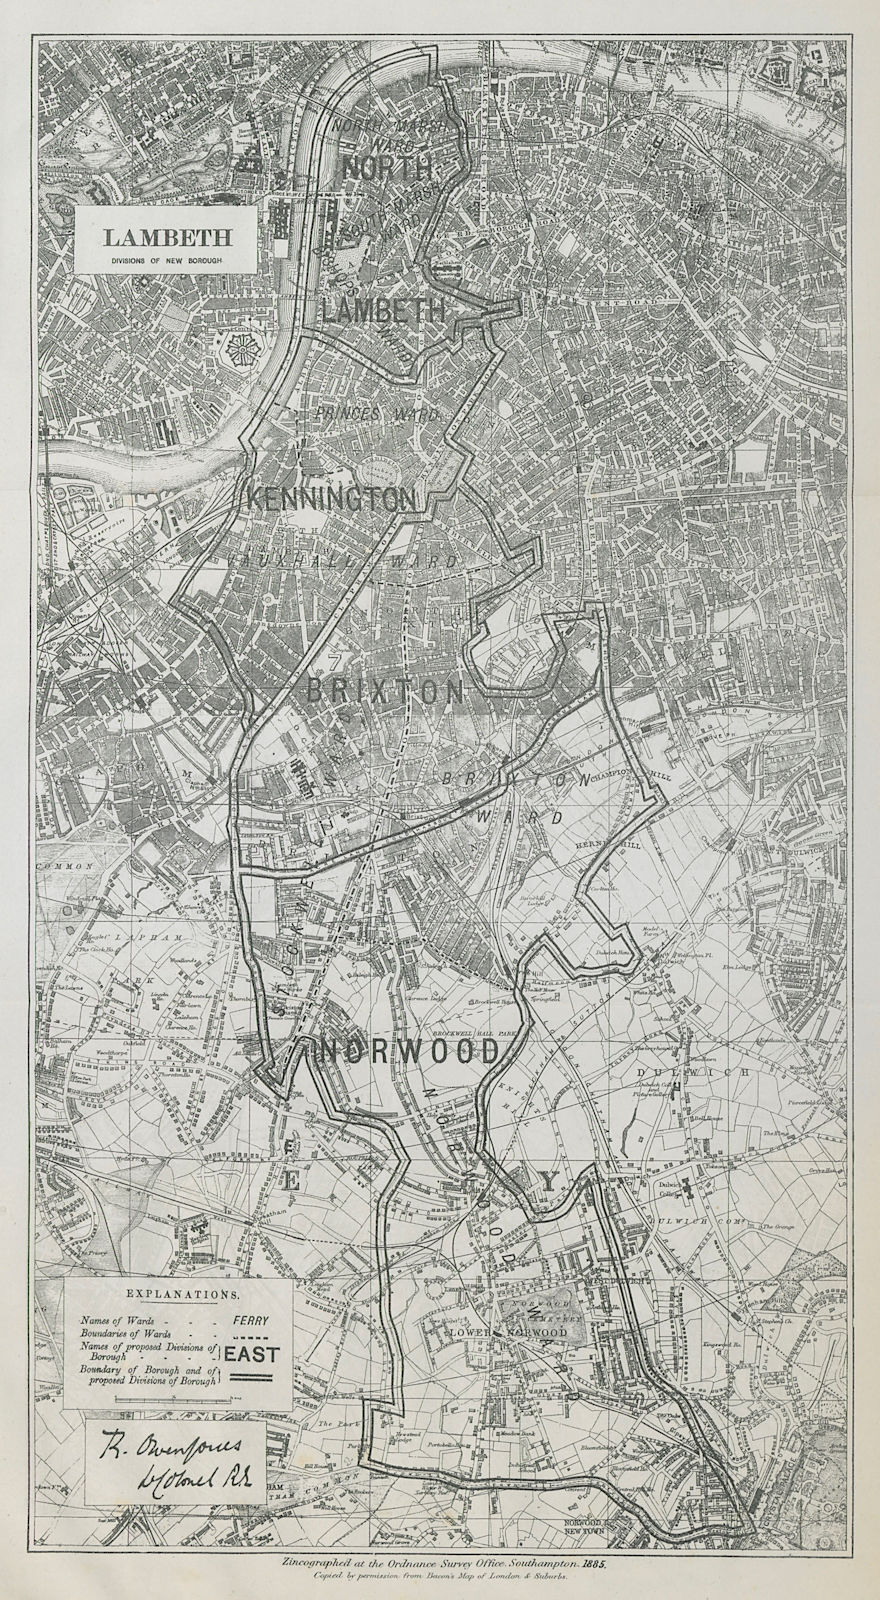 Lambeth Parliamentary Borough. Kennington Brixton. BOUNDARY COMMISSION 1885 map